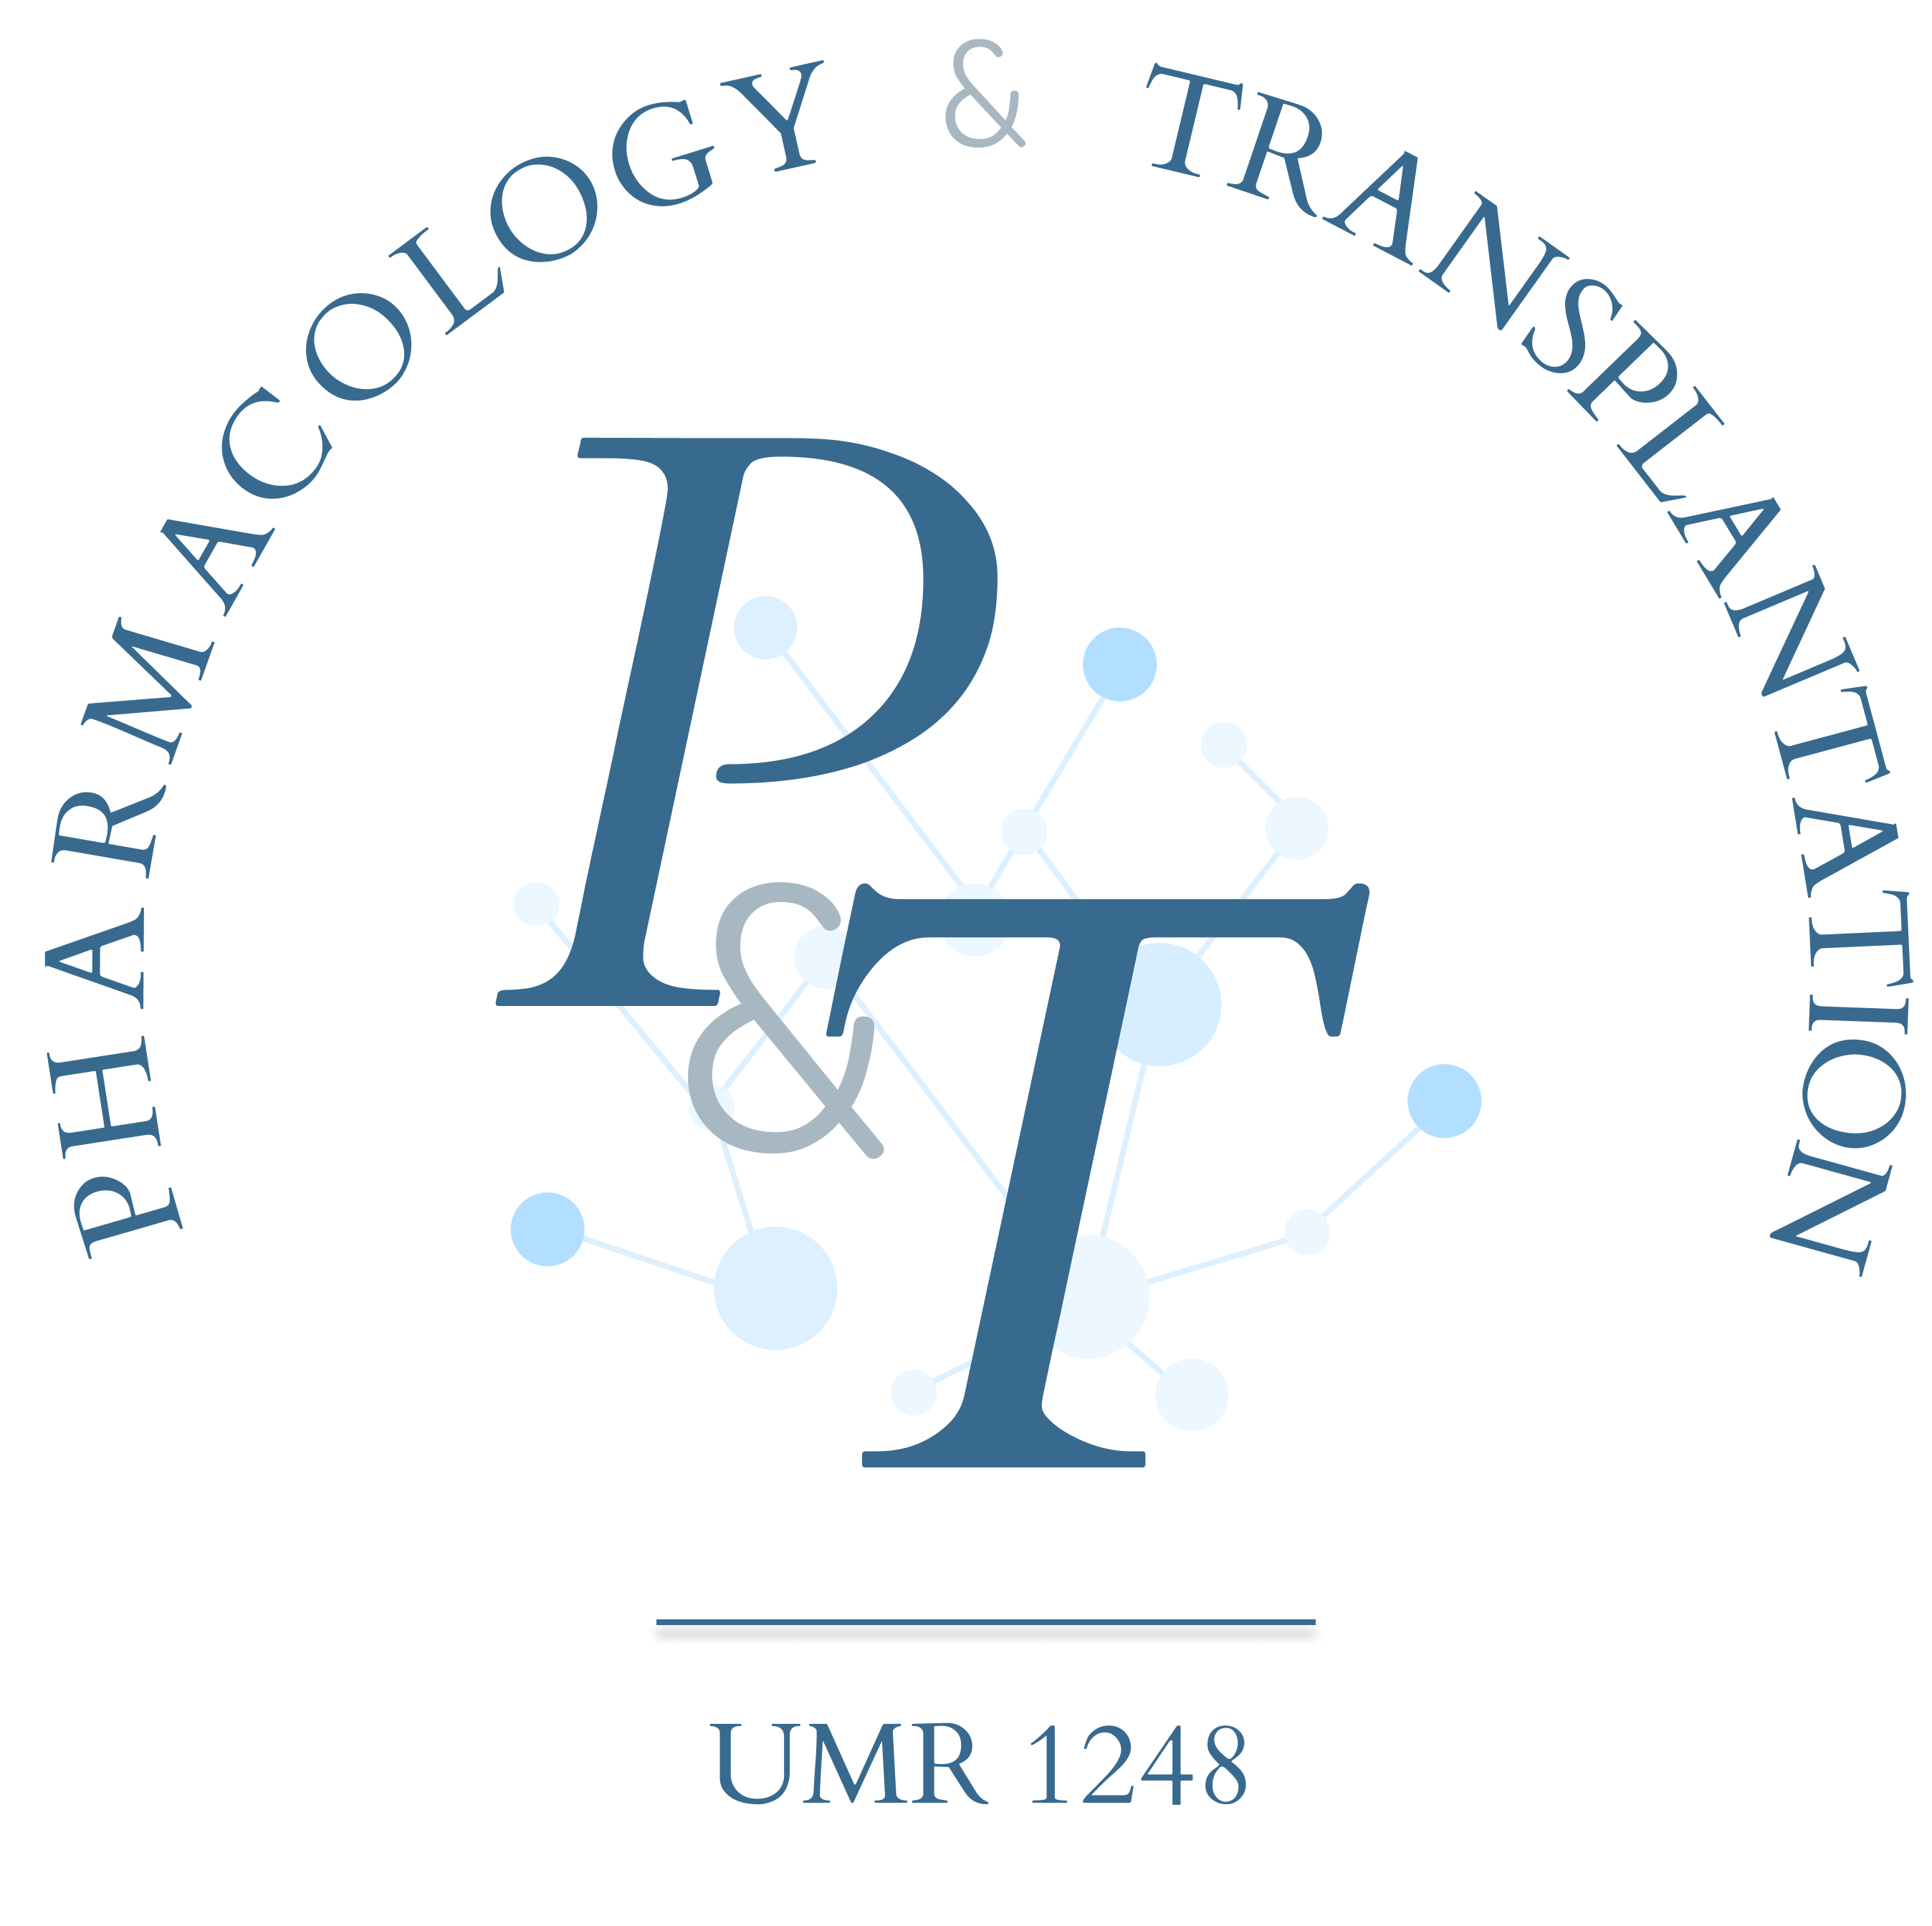 P&T - Pharmacologie et Transplantation